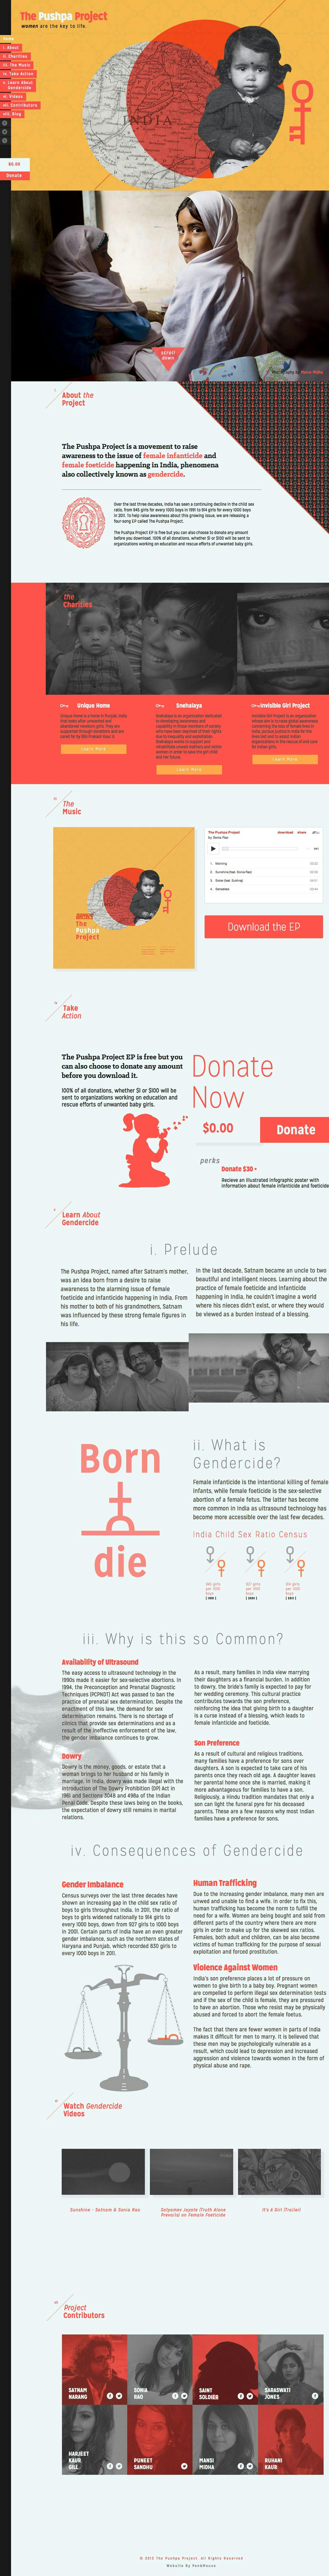 The Pushpa Project Website Screenshot